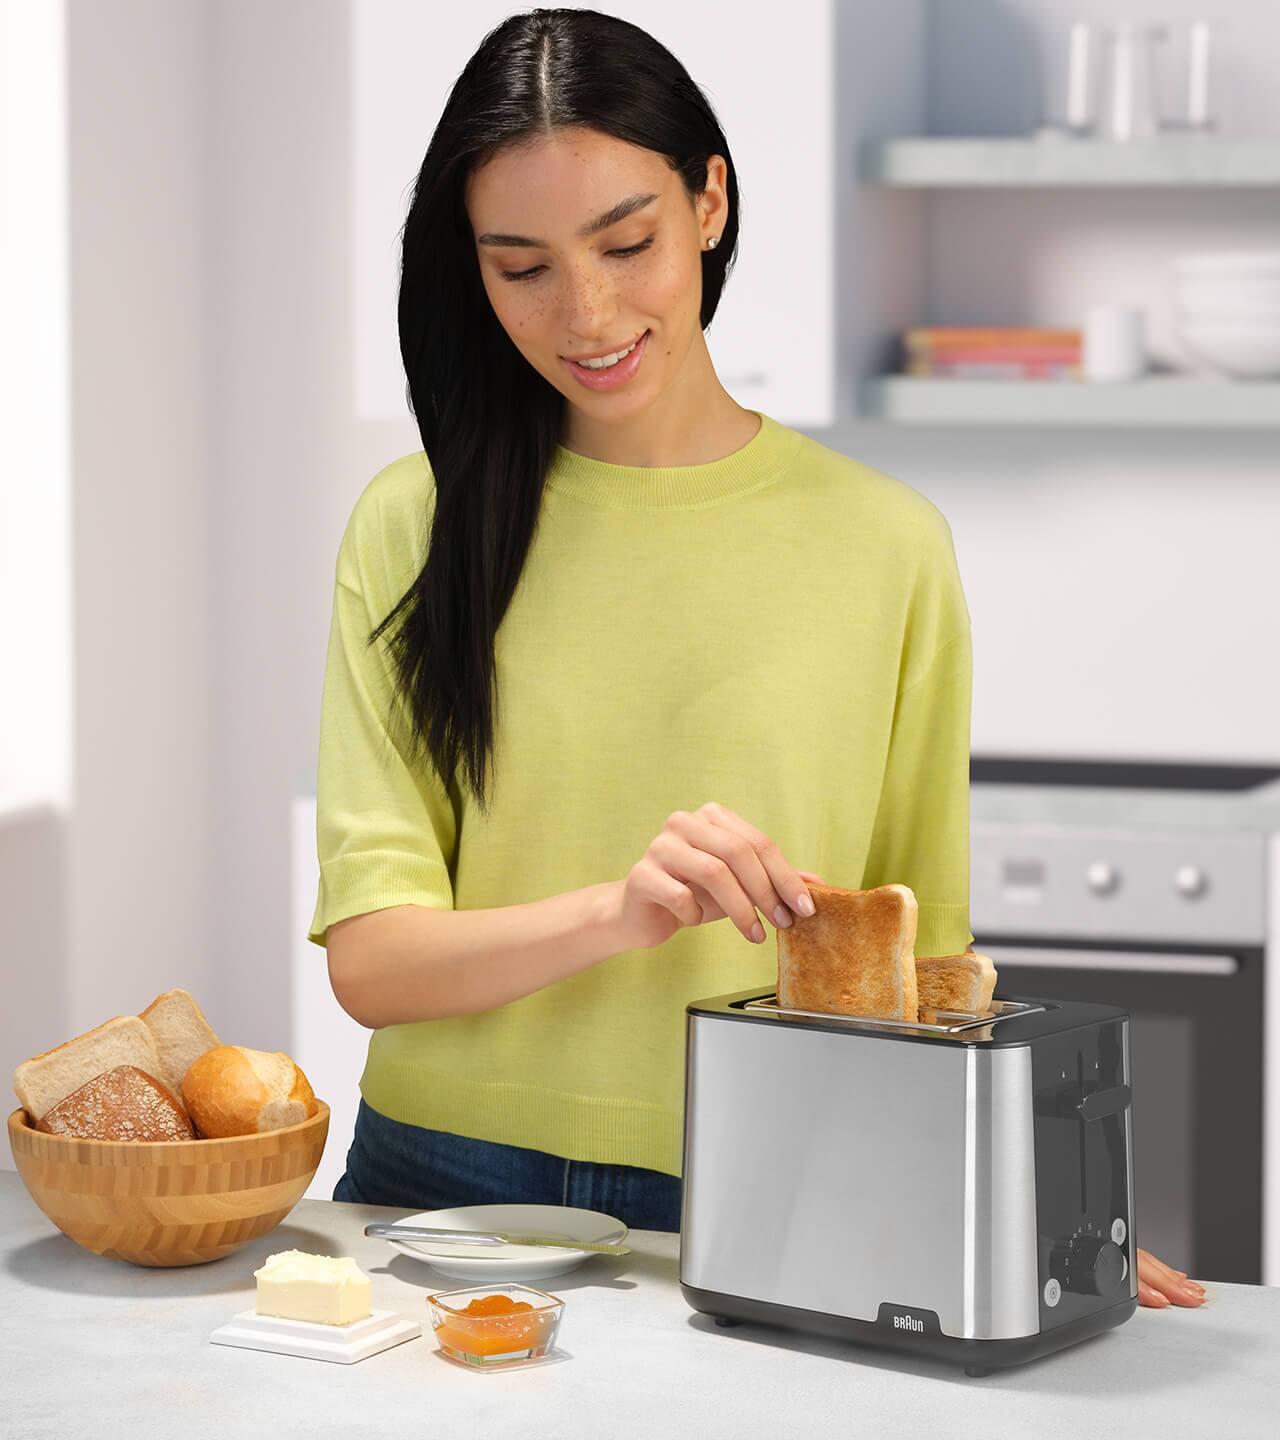 Braun PurShine Toaster in use